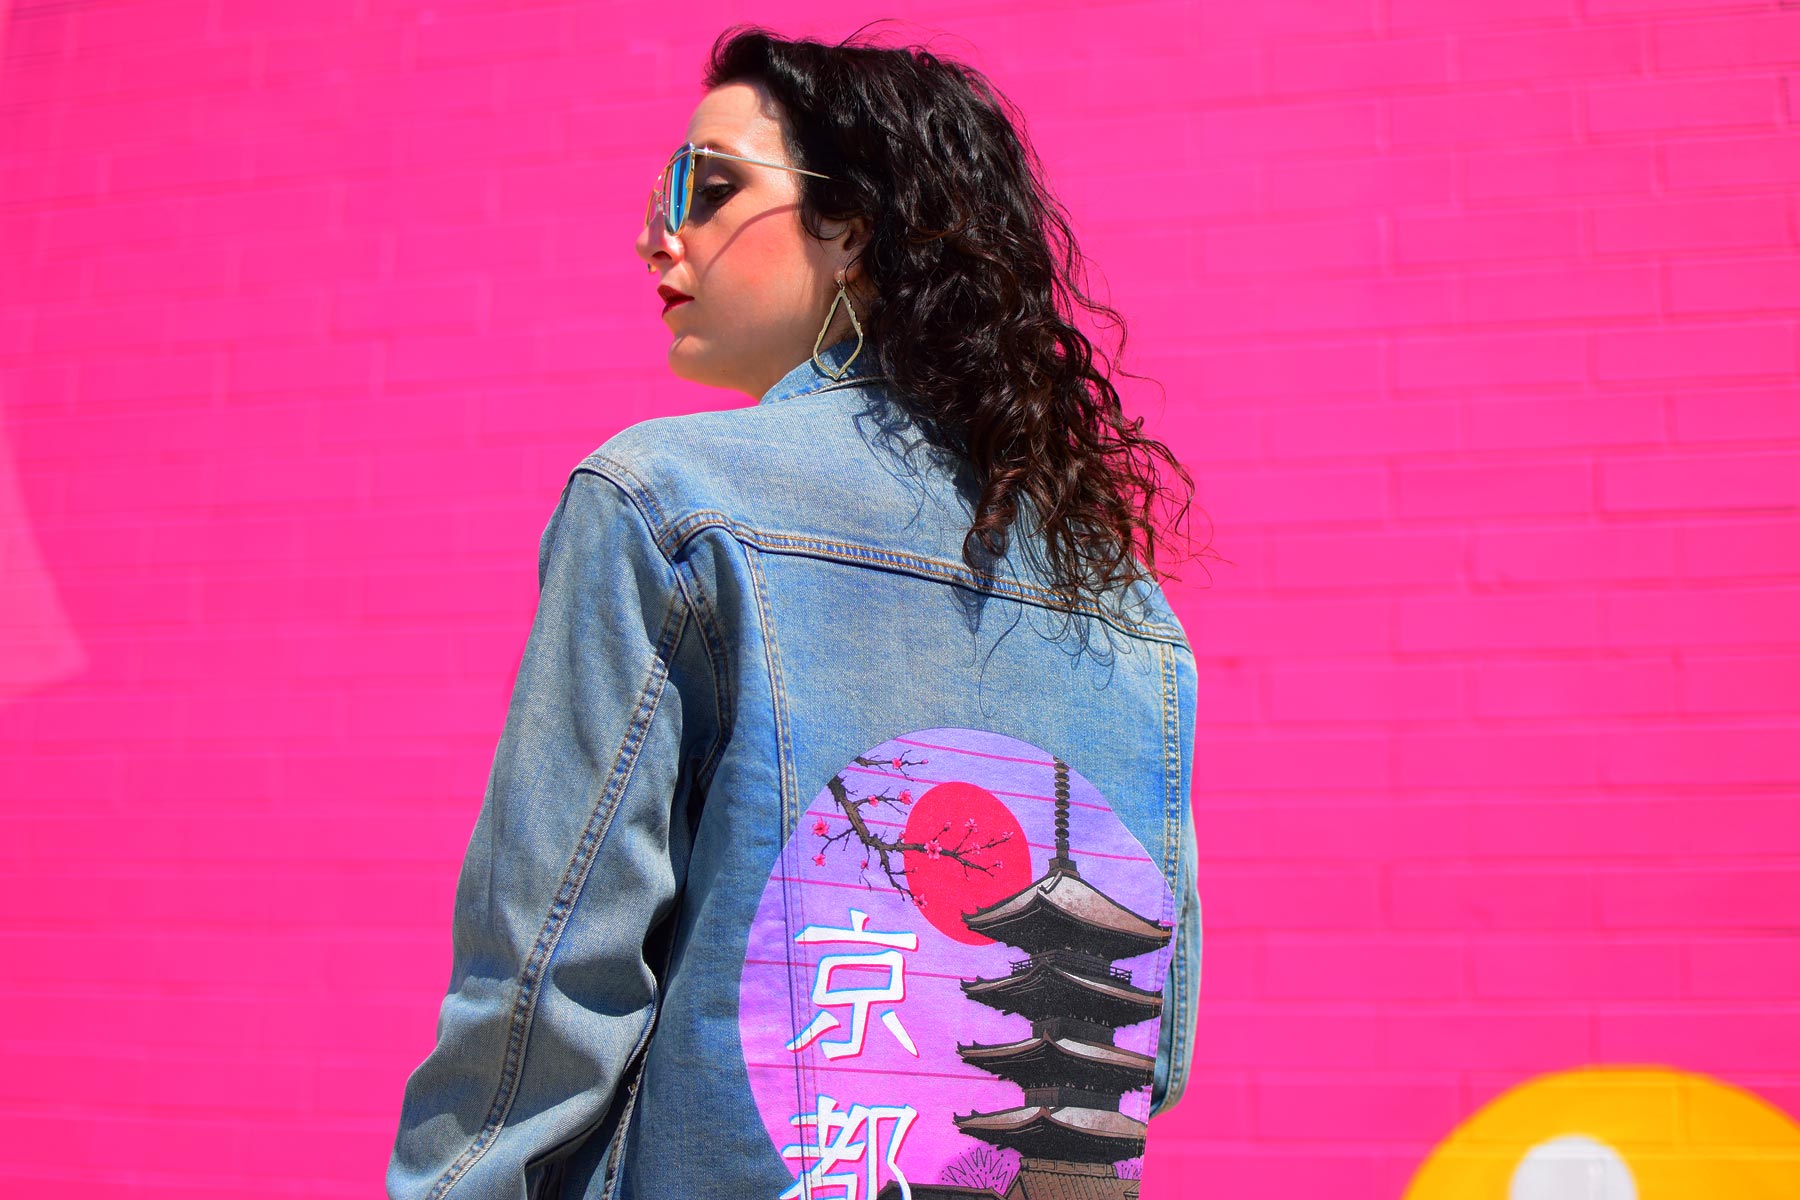 painted jean jacket  Blog  Anna Osgoodby Life  Biz  Seattle Lifestyle  Blogger  Goals Coach